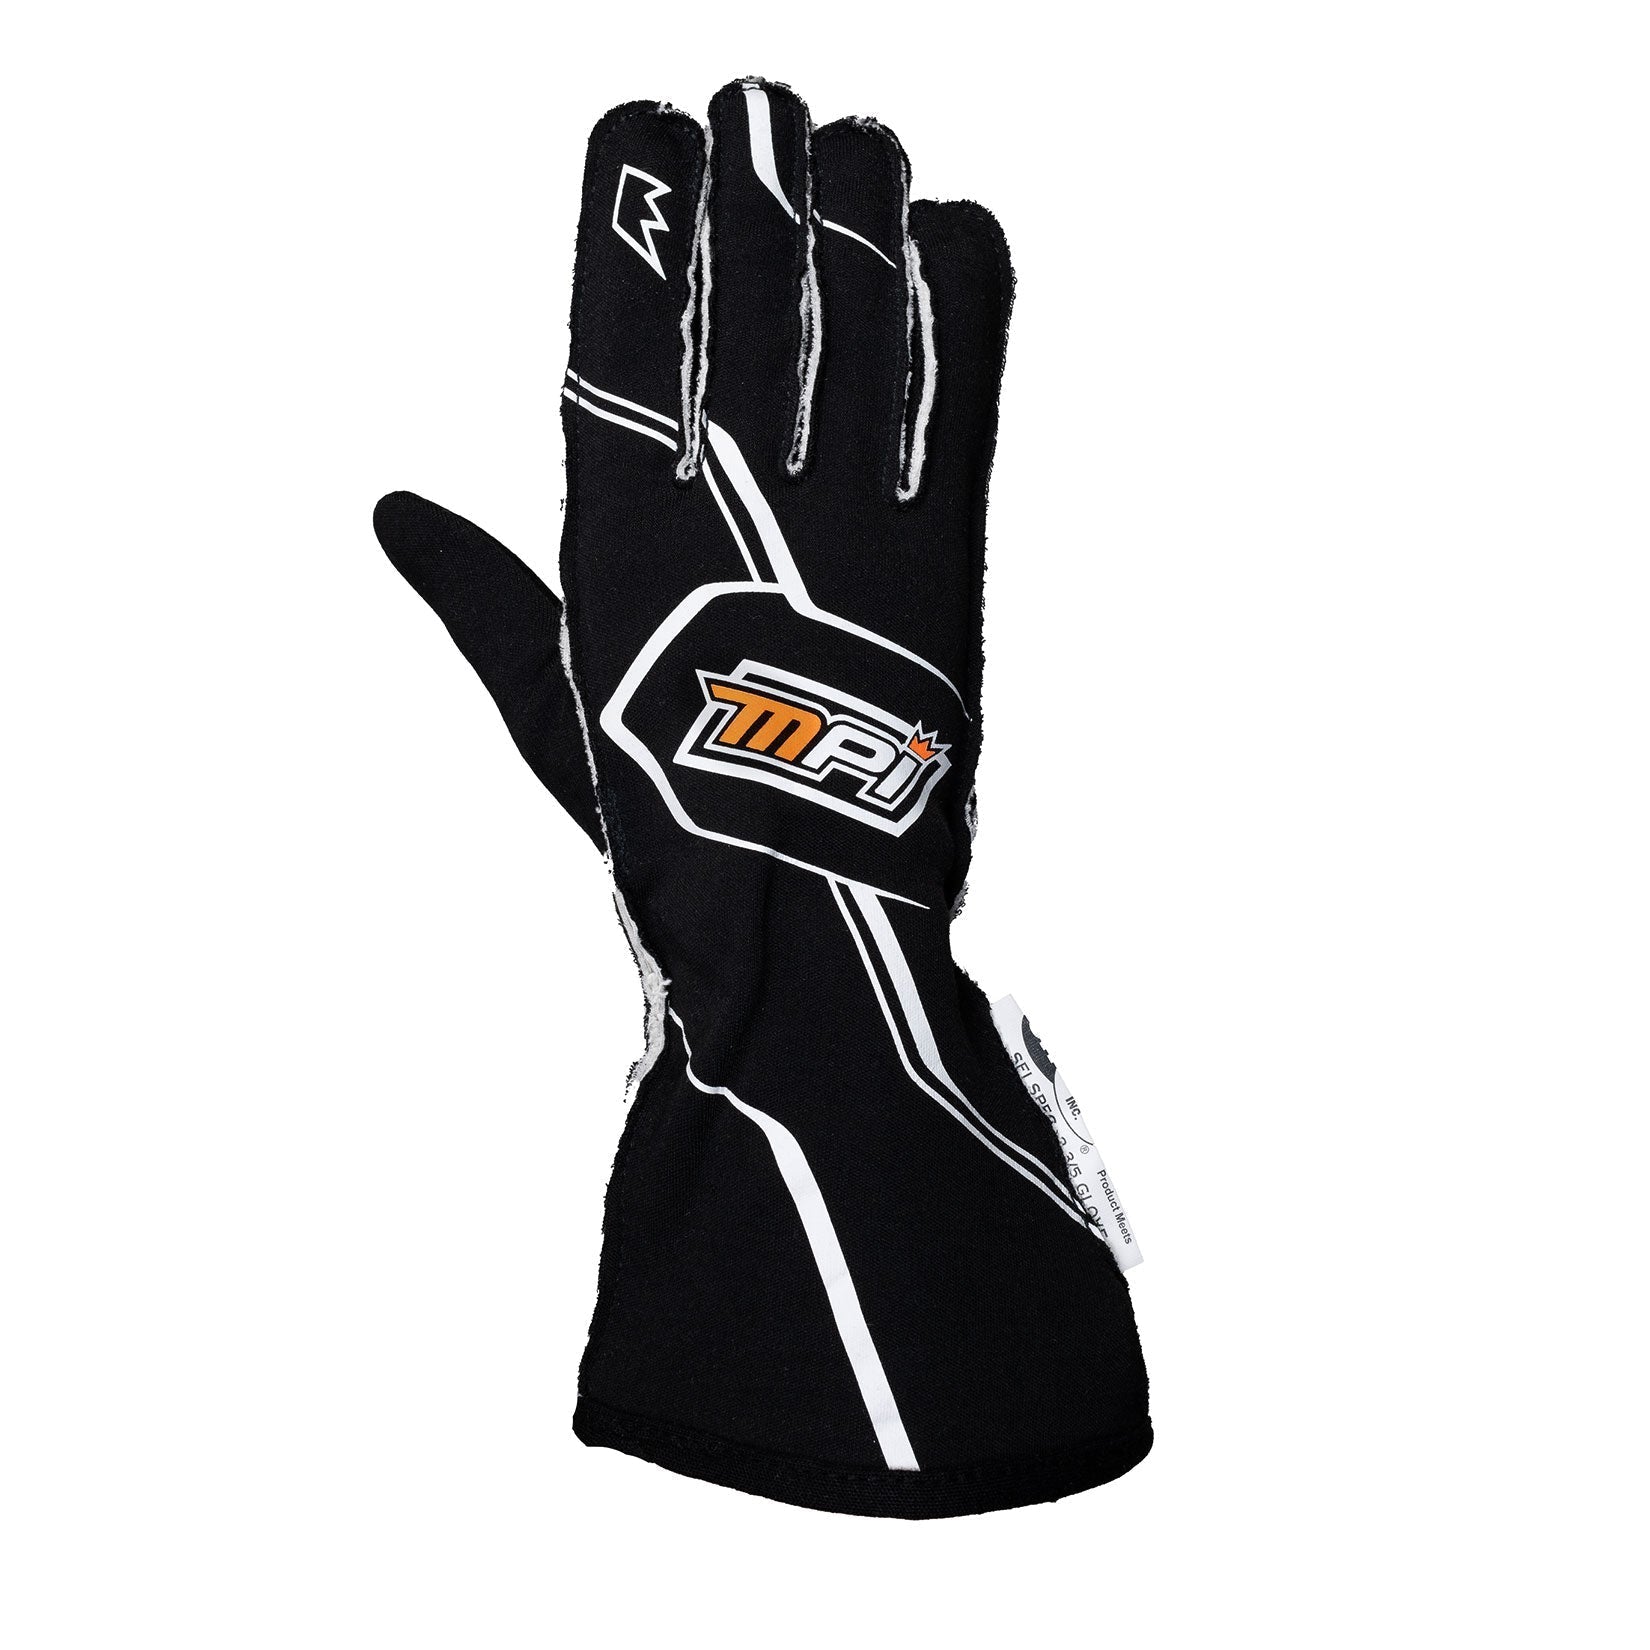 Max Papis Innovations Racing Gloves Black XL MPI display